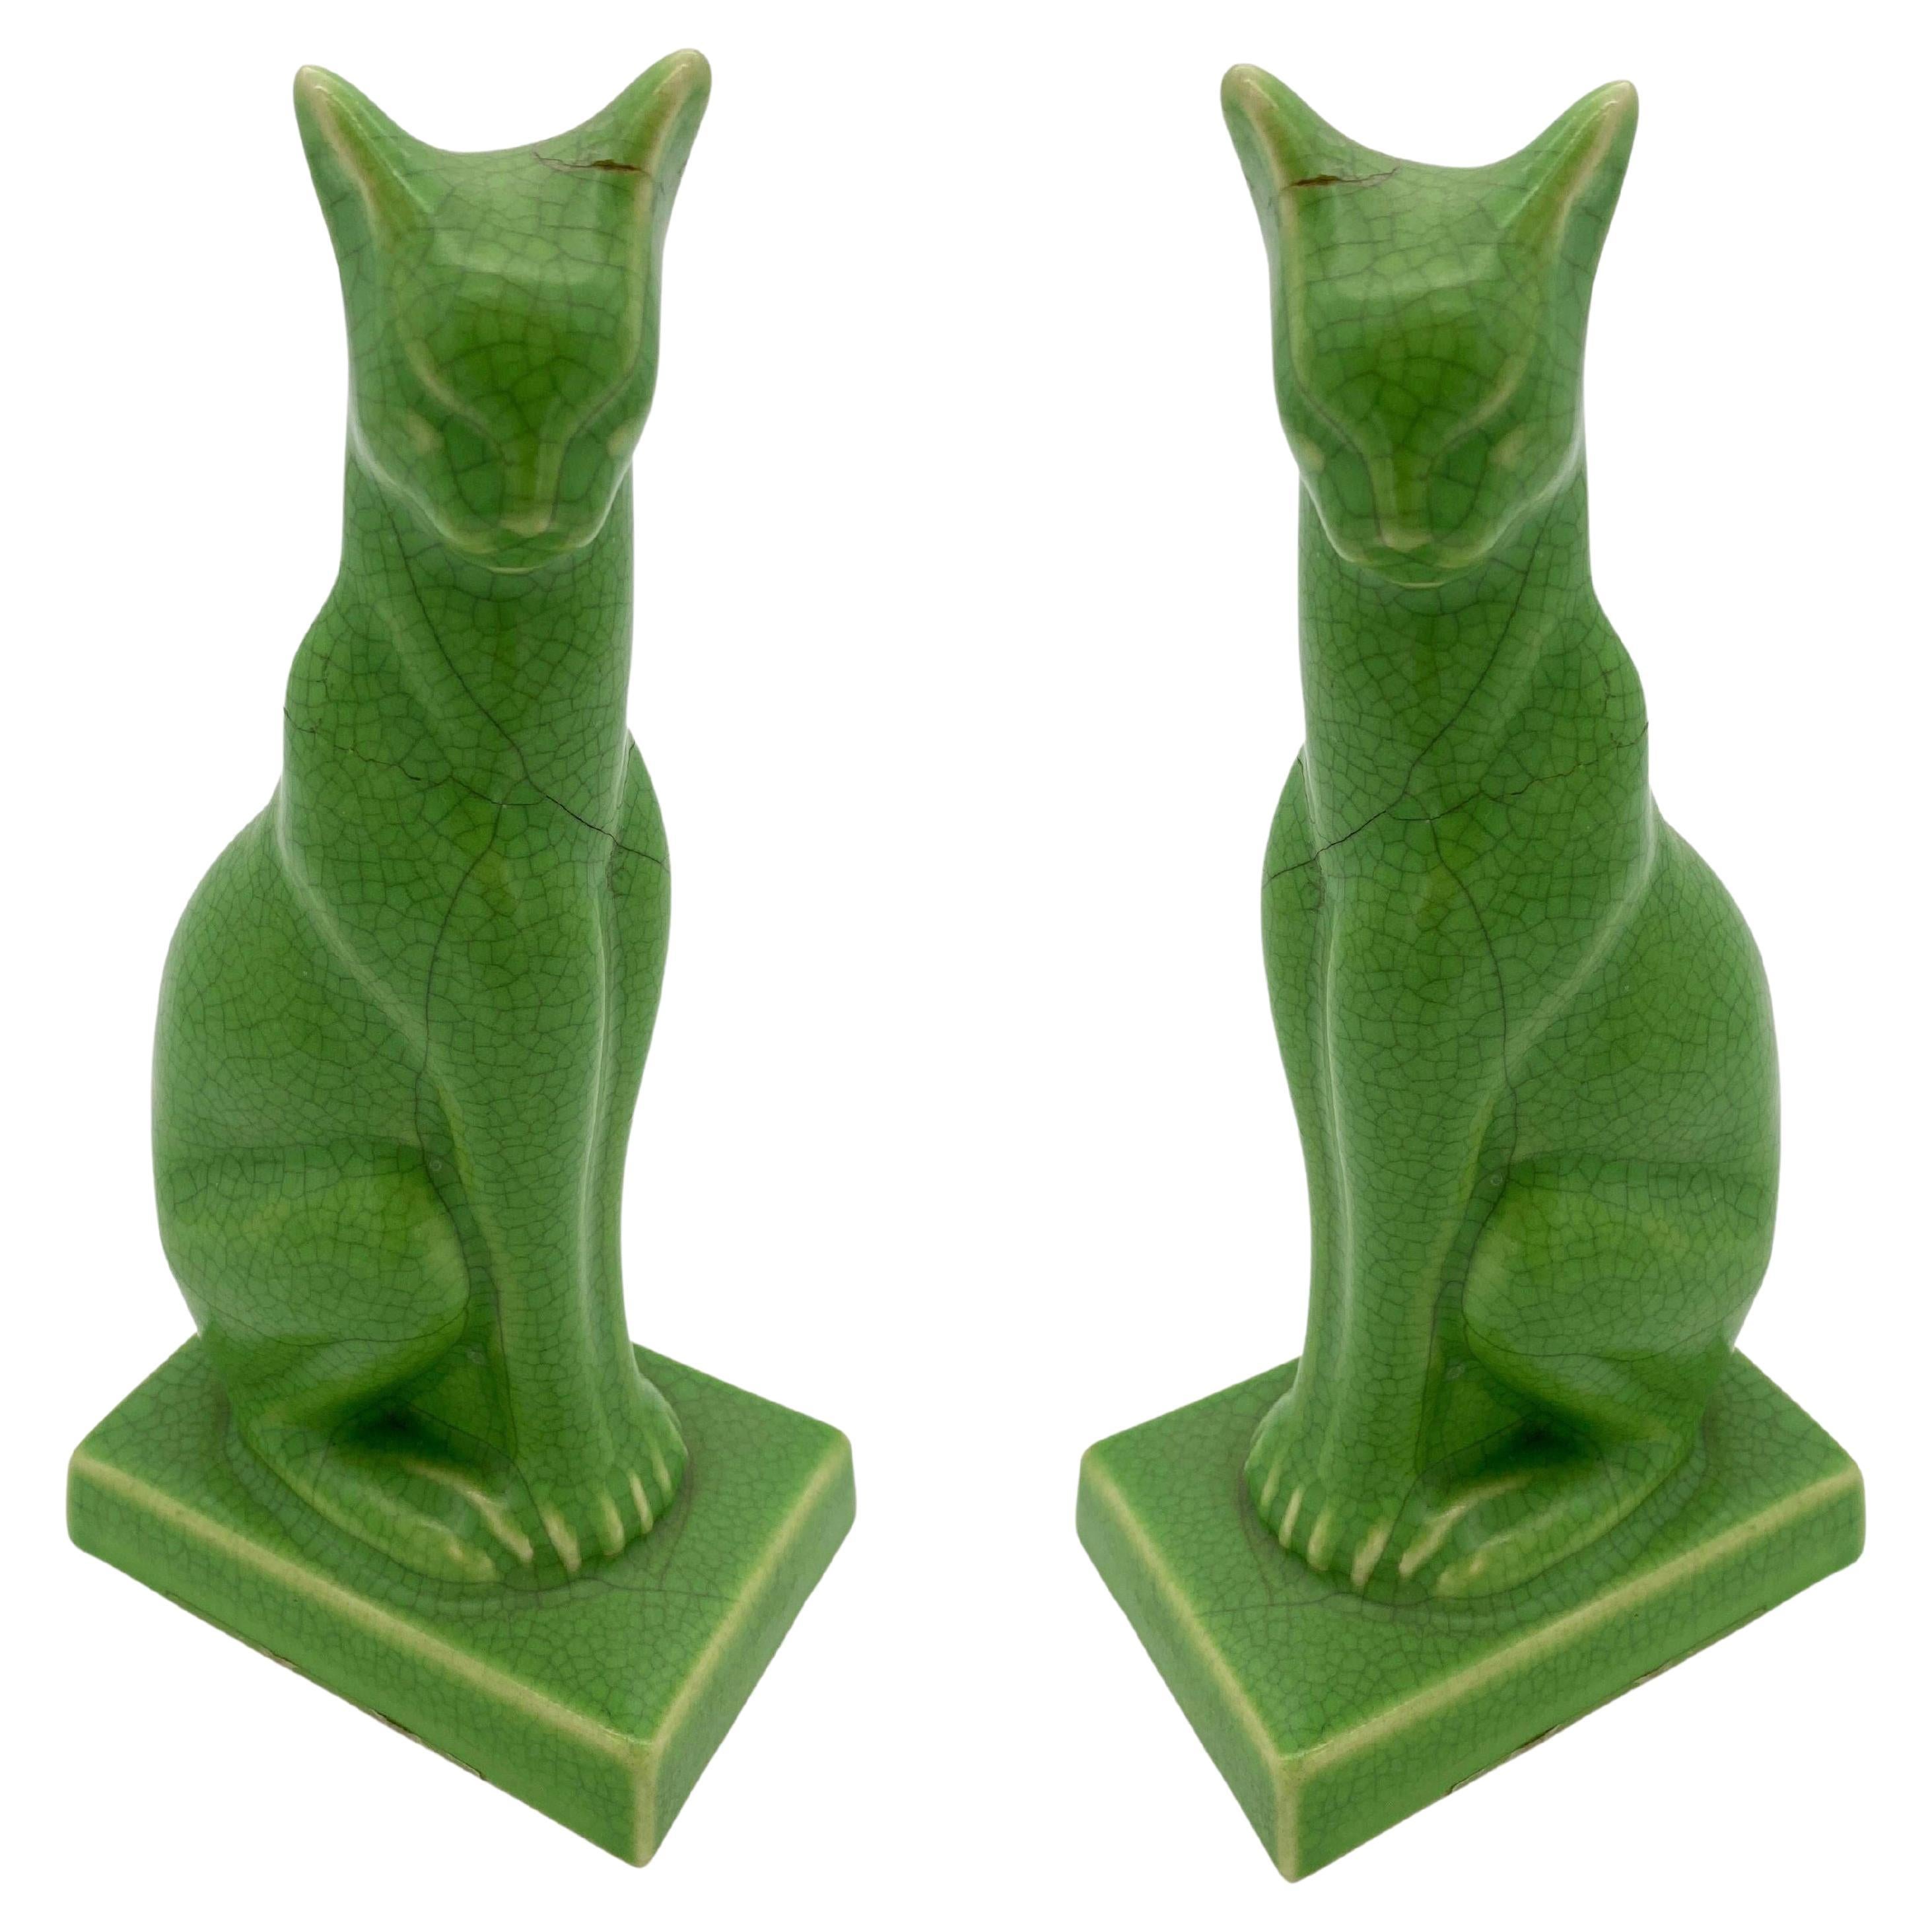 Egyptian Revival Art Deco Green Ceramic Bastet Cat, Pair